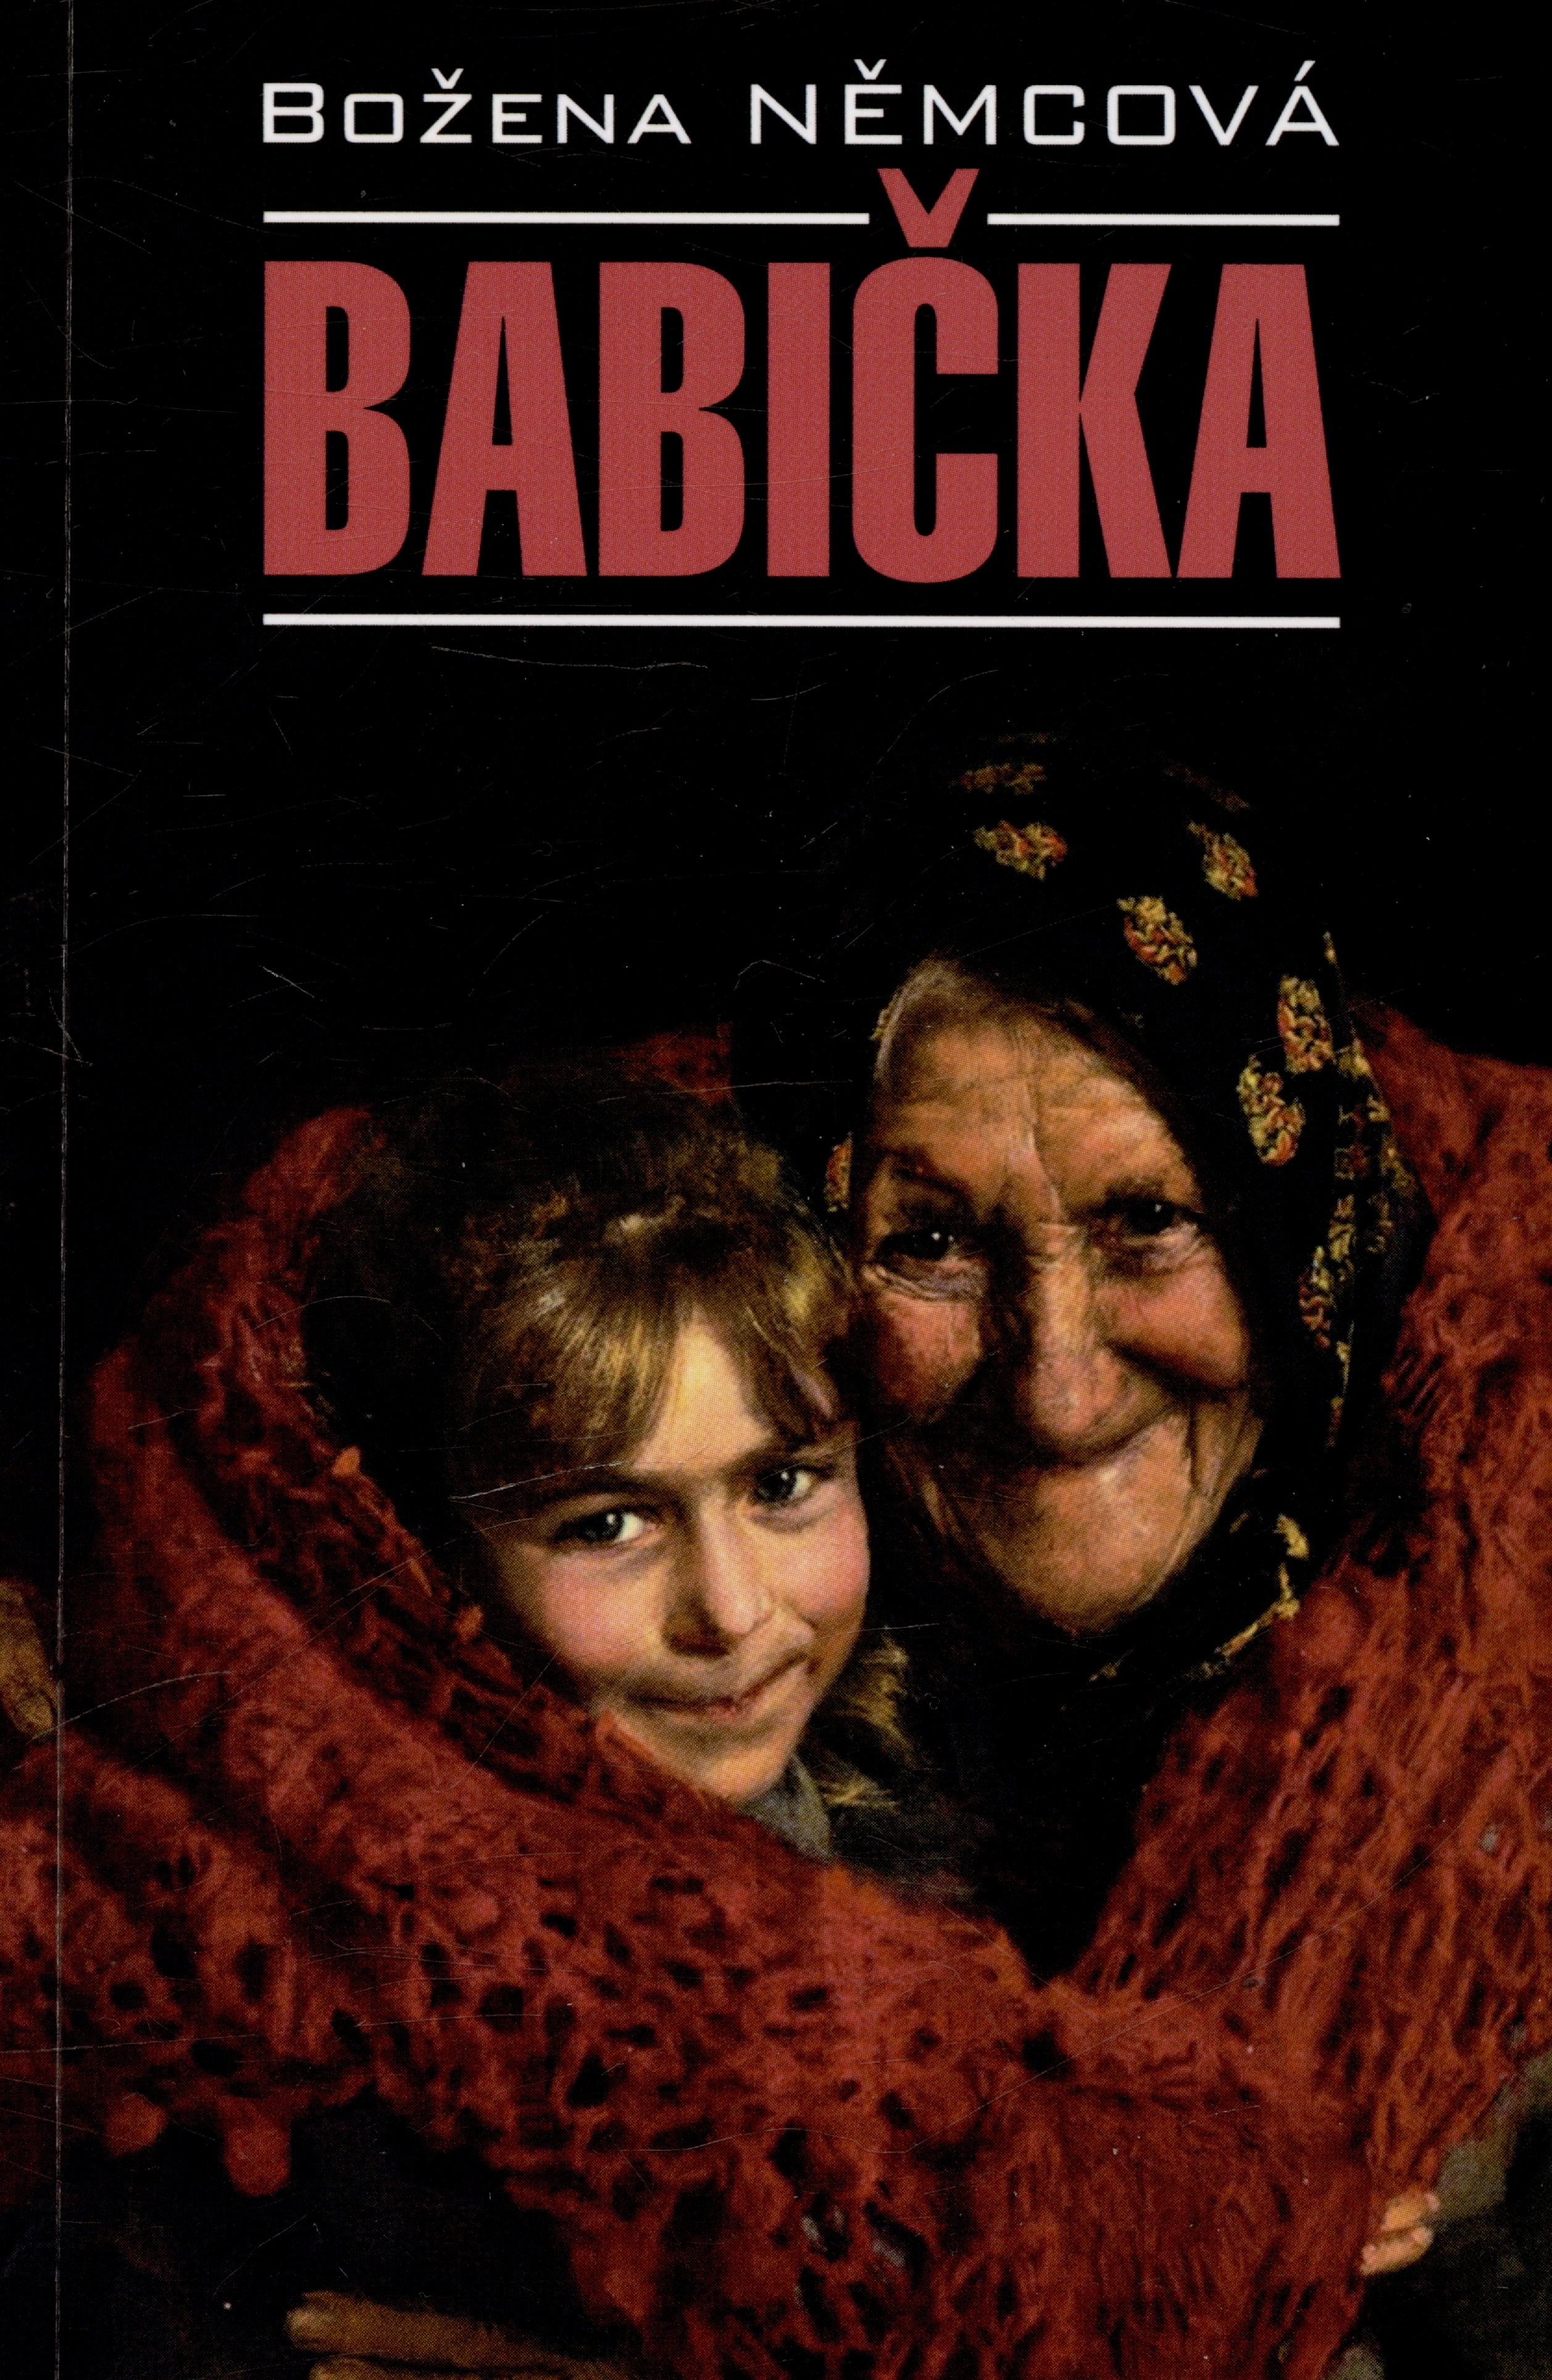 hbr s 10 must read Немцова Божена Babicka / Бабушка ( книга для чтения на чешском языке)